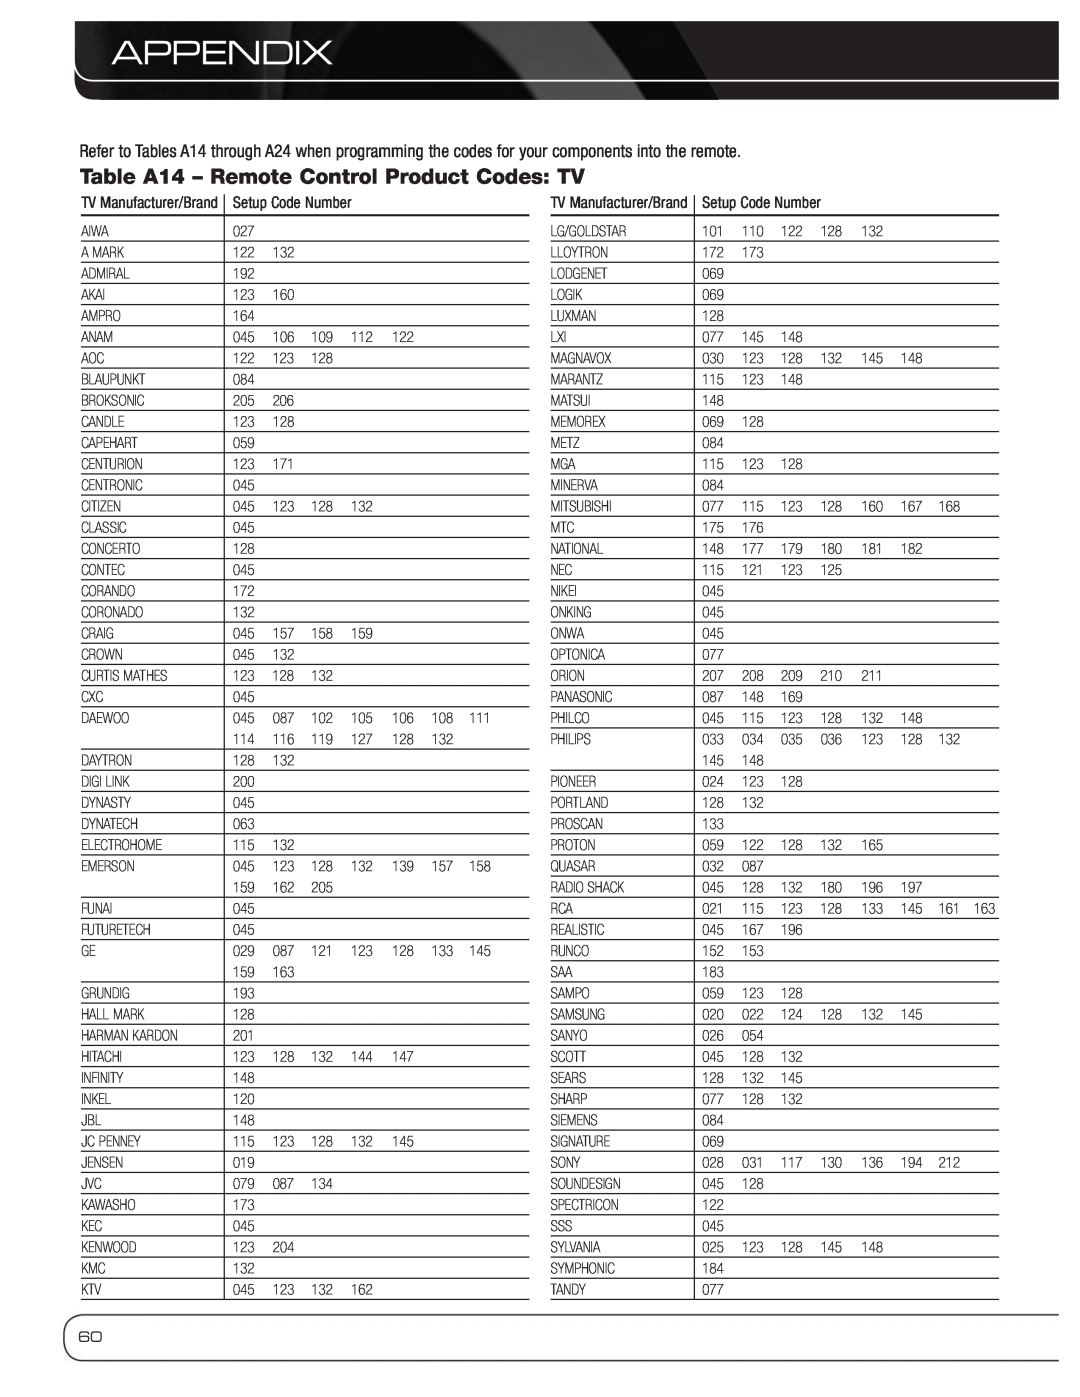 Harman-Kardon AVR 3600 owner manual Table A14 – Remote Control Product Codes: TV, Appendix 